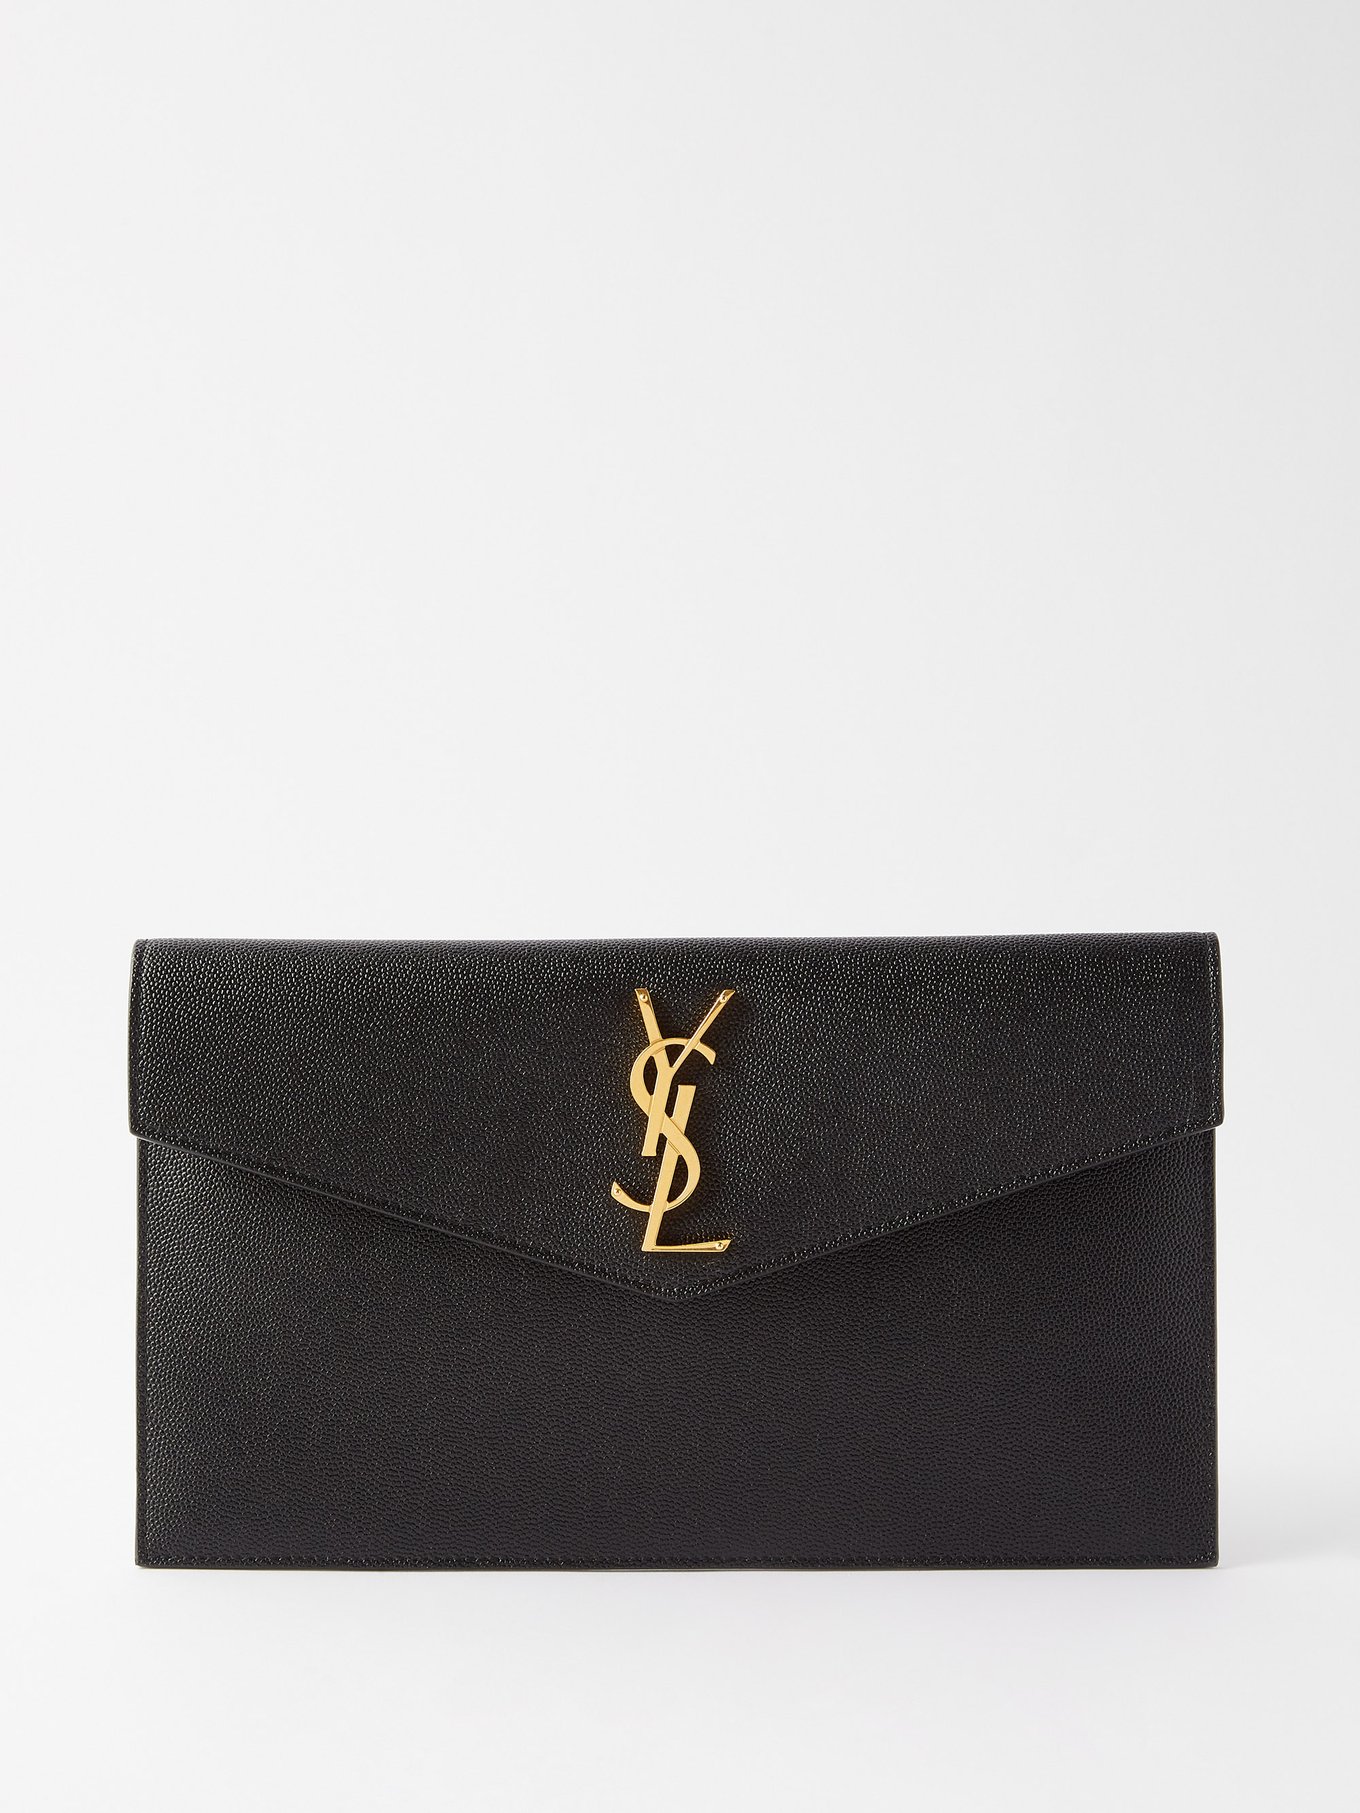 White Uptown YSL-plaque grained-leather clutch bag, Saint Laurent